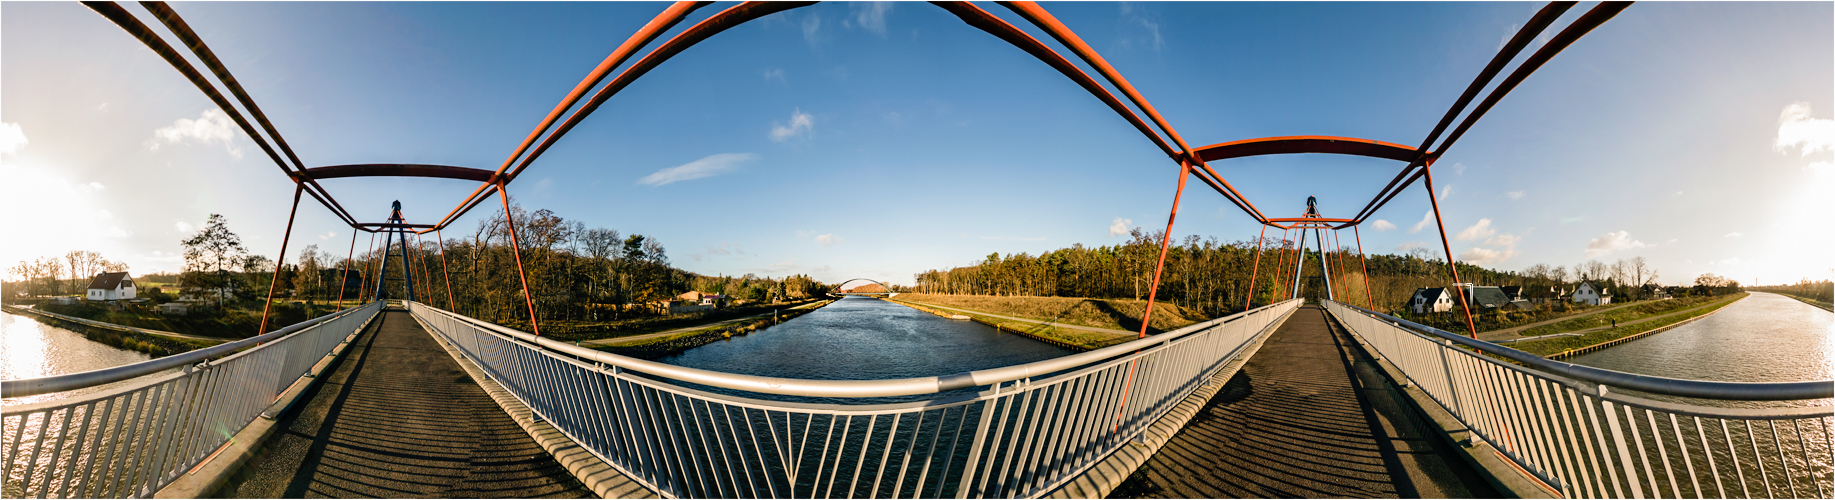 Faszination Brücke (360°-Ansicht)